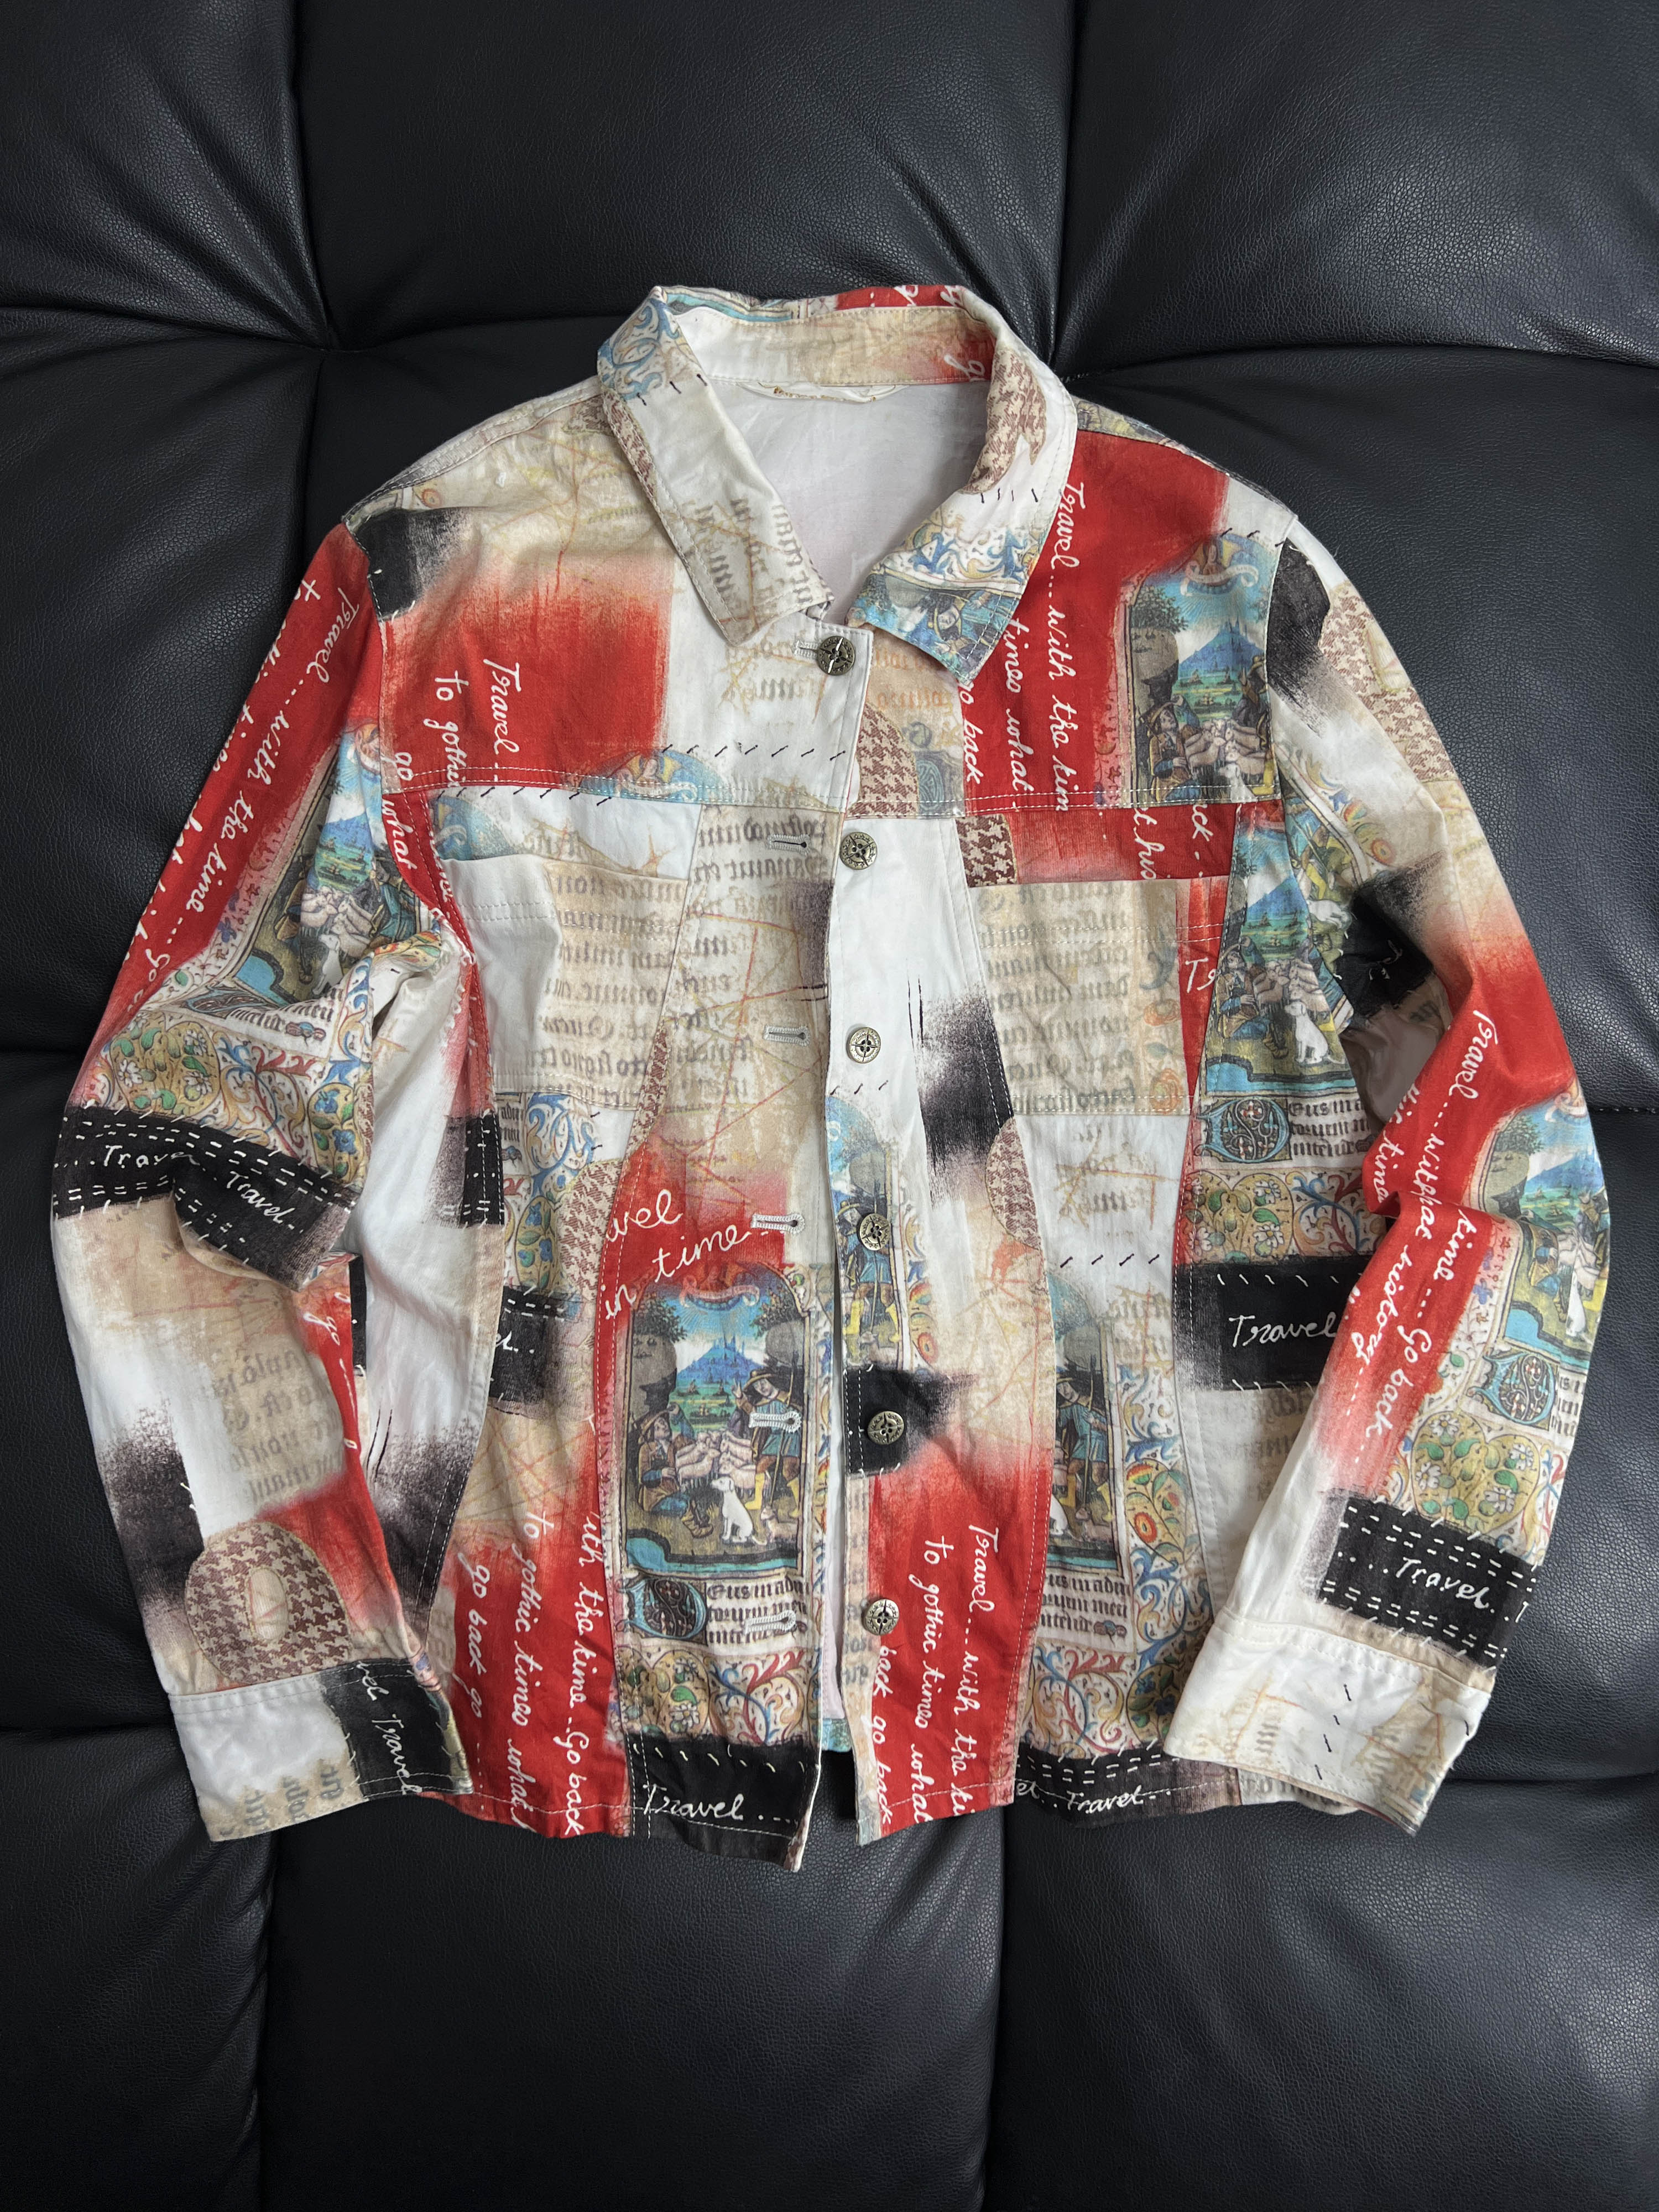 vintage pattern shirts jacket